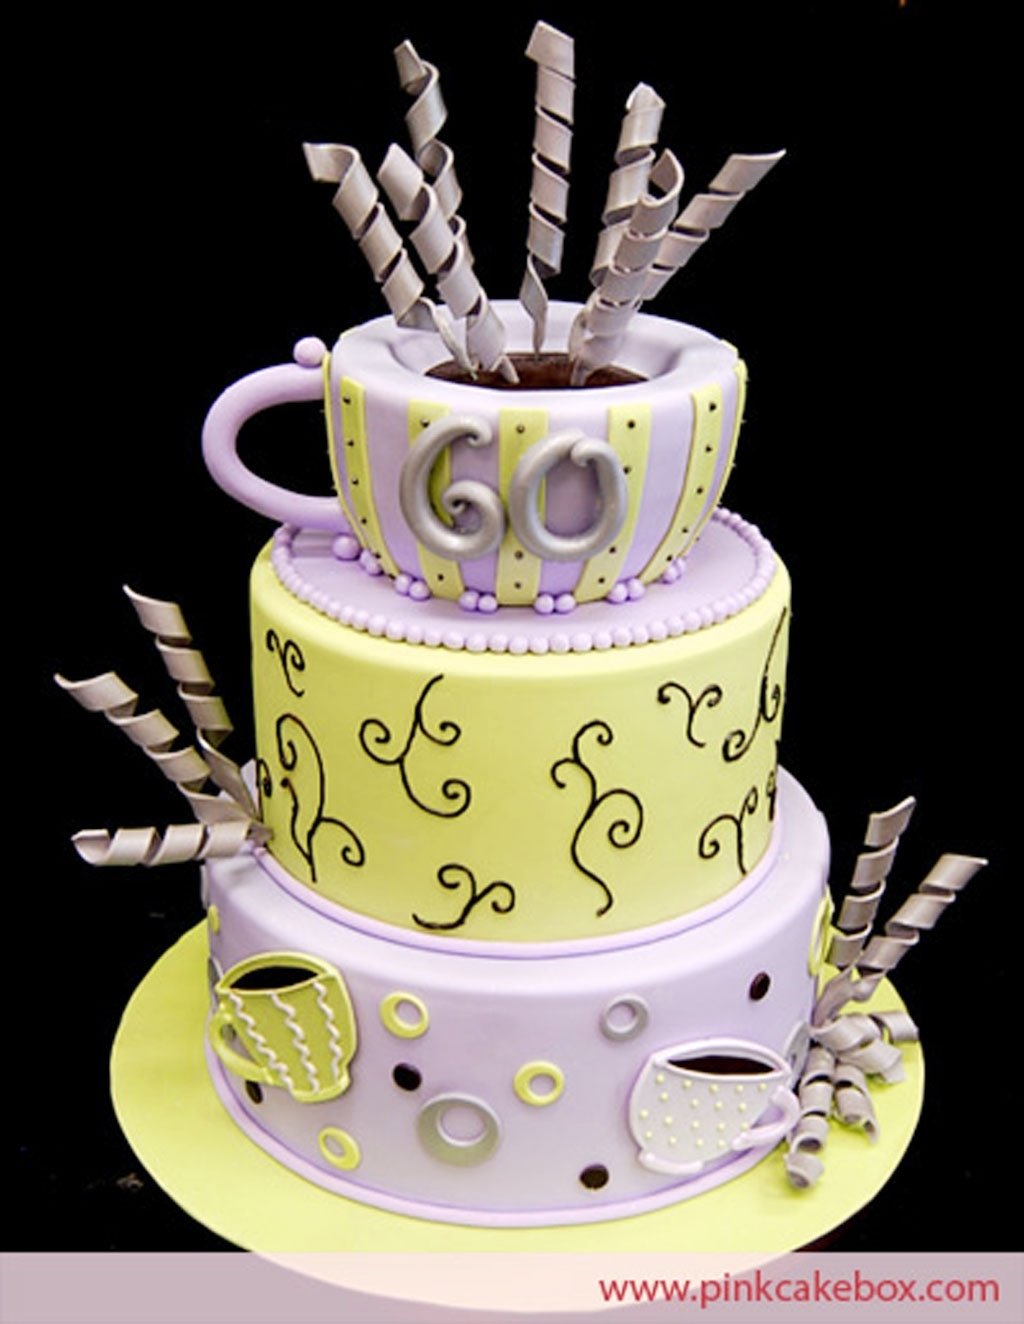 10 Awesome Birthday Cake Ideas For Women pinjeannette travis on birthday ideas pinterest 60th 2022